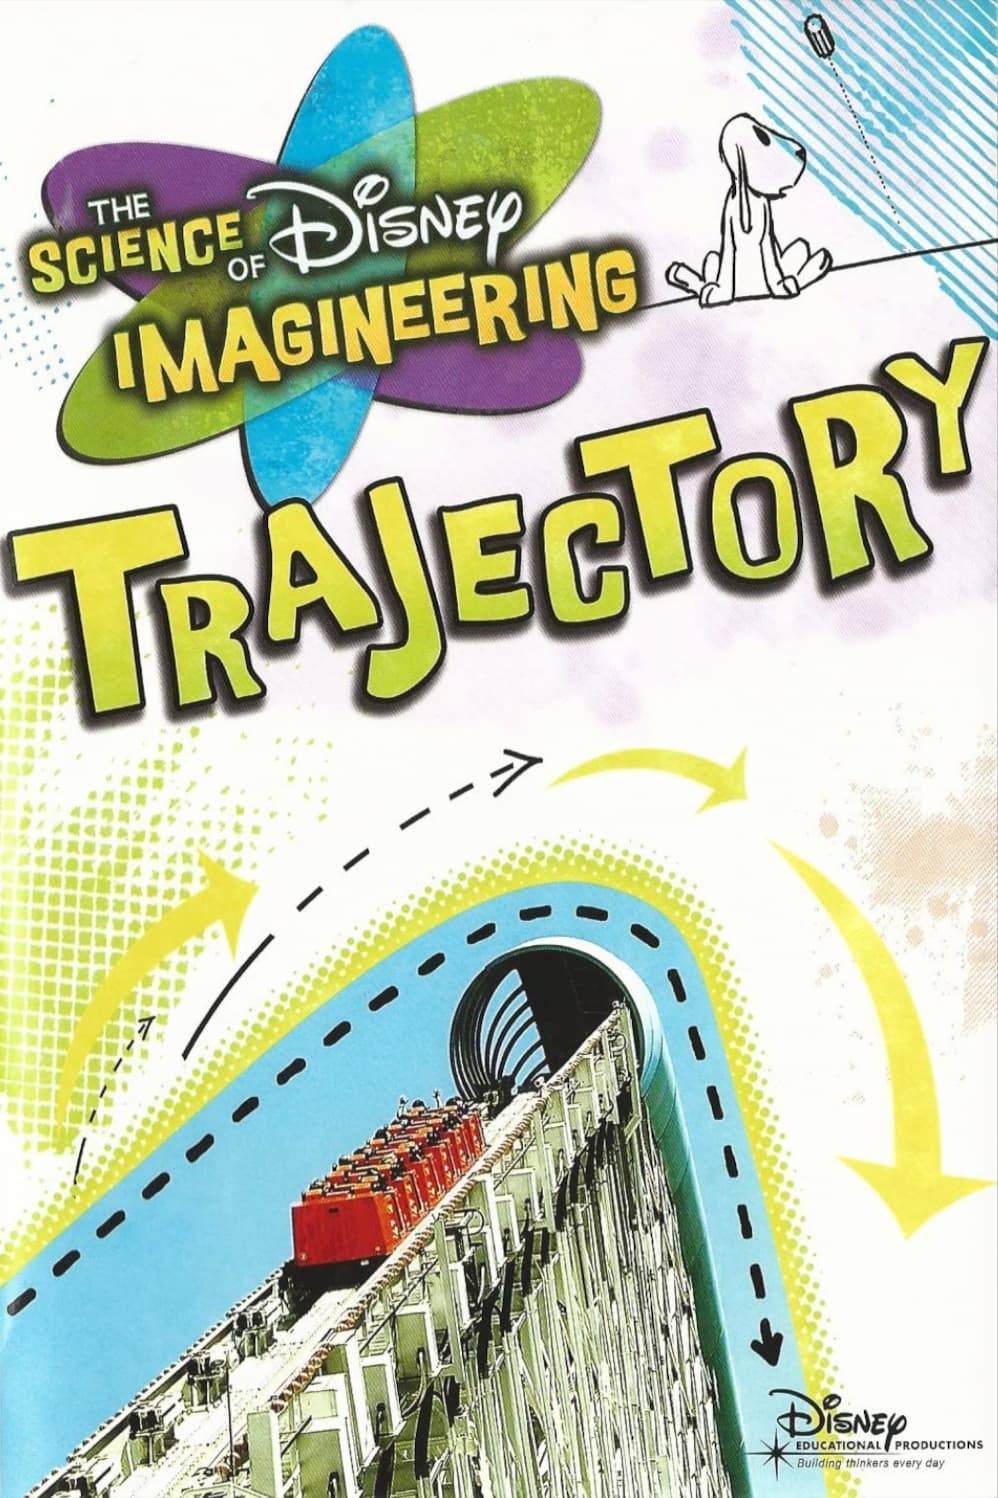 The Science of Disney Imagineering: Trajectory